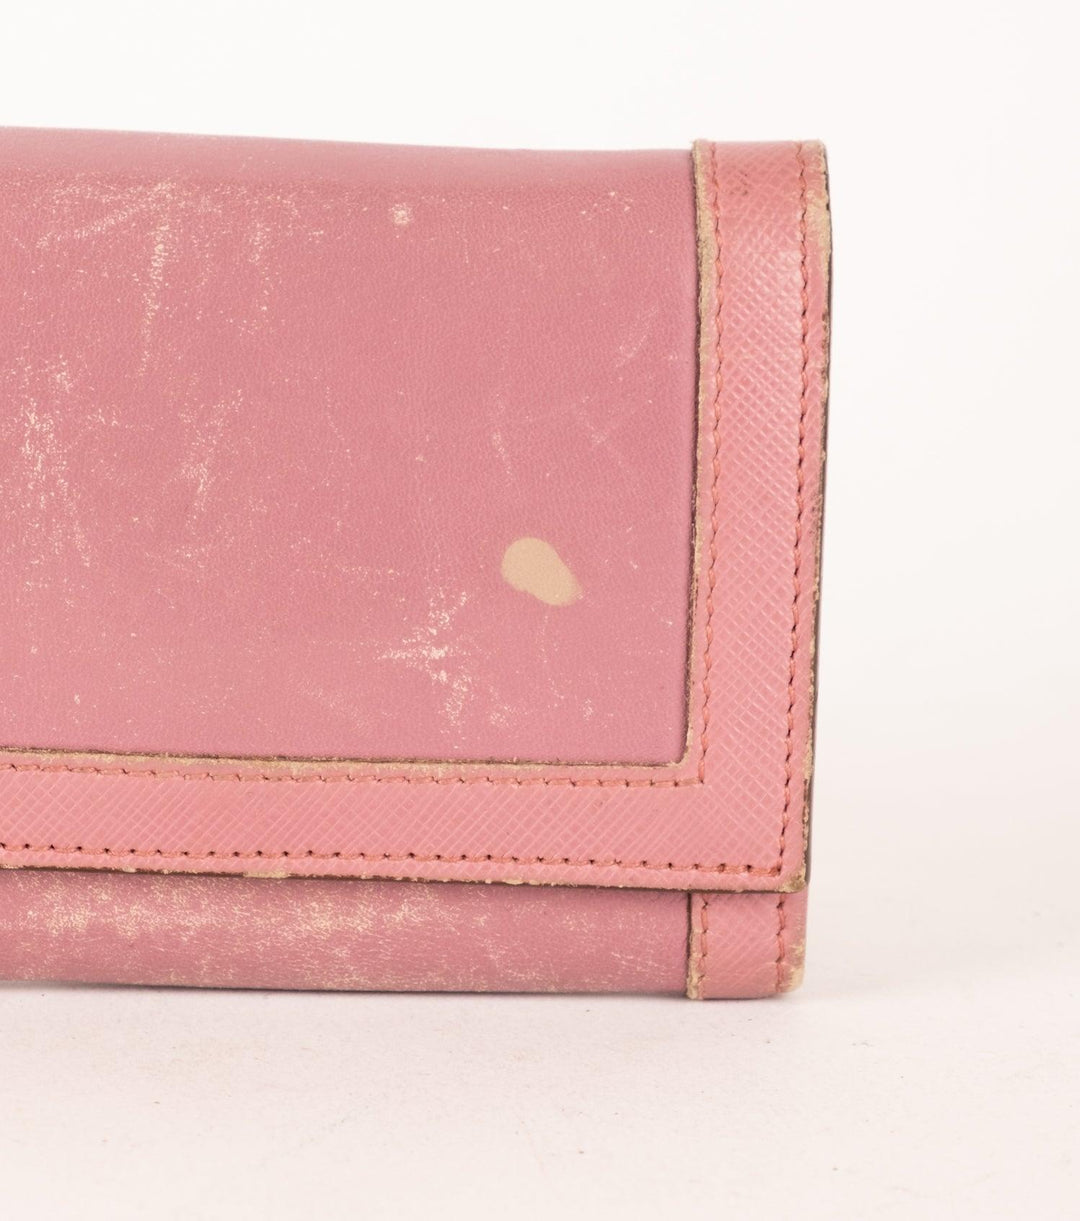 Pink Wallet - Volver